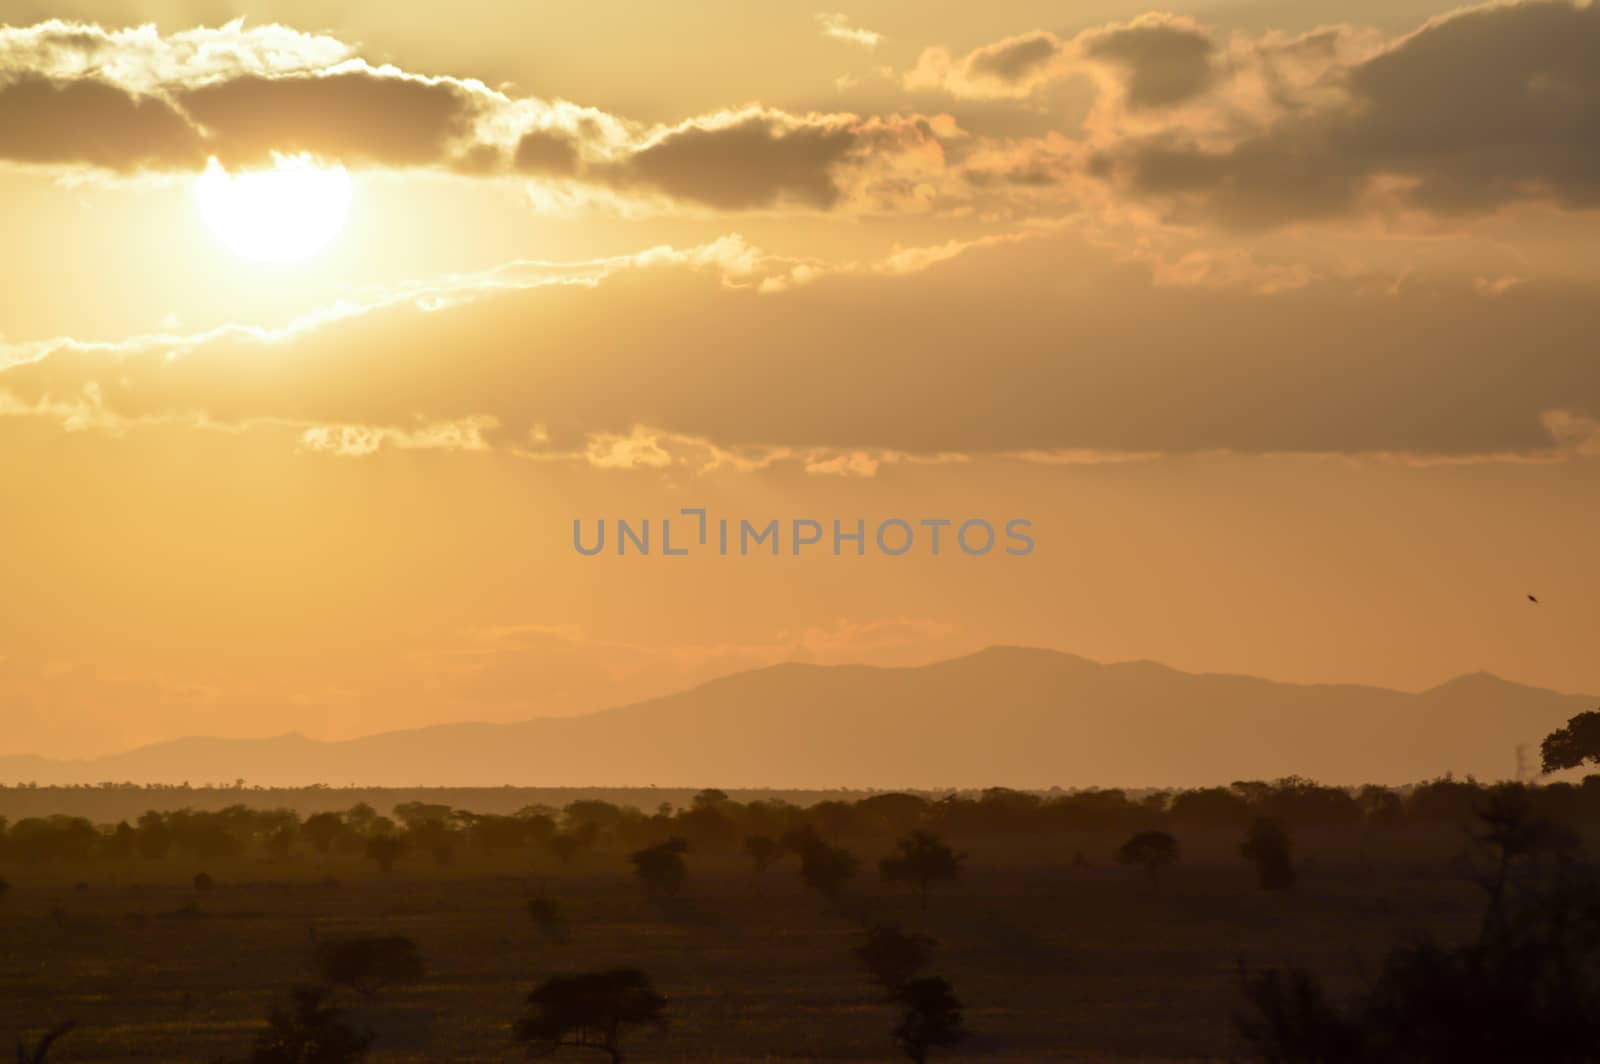 Sunset over the savanna of West Tsavo Park in Kenya